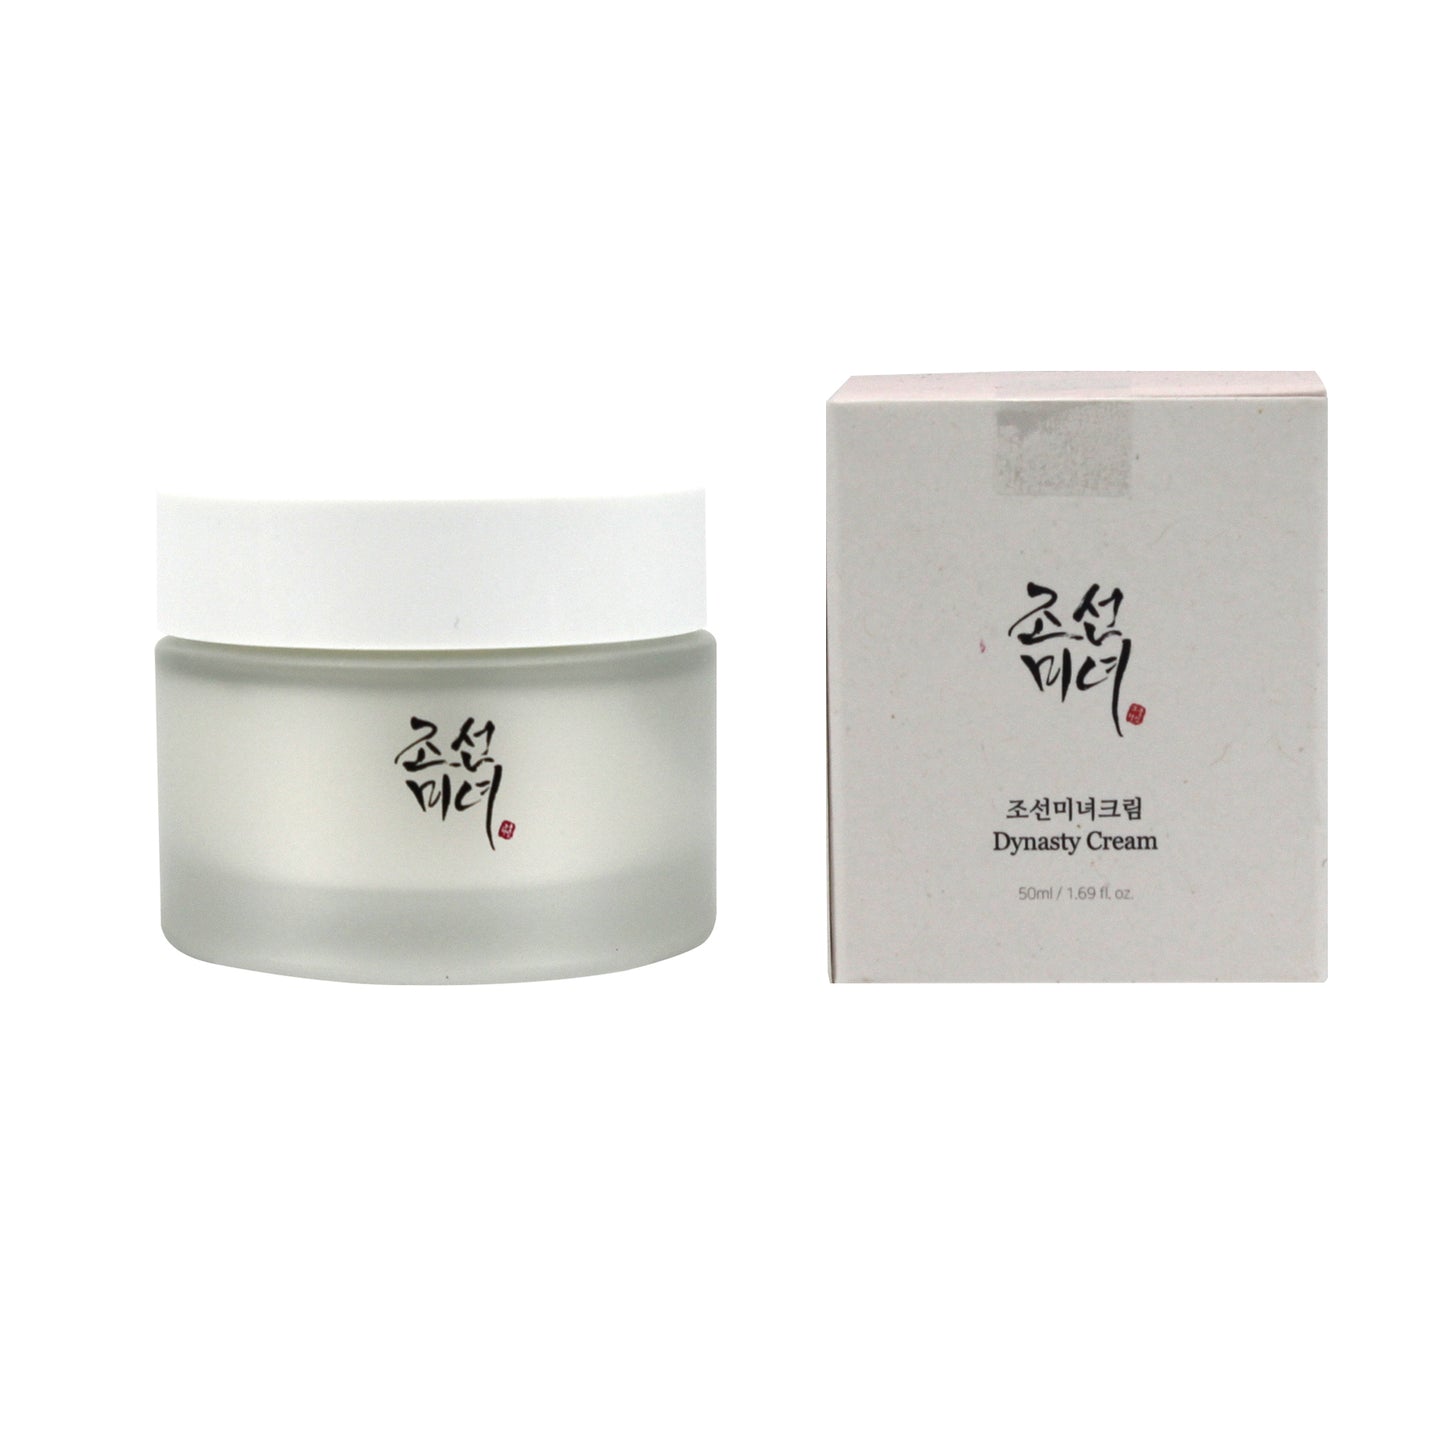 Beauty of Joseon Dynasty Cream (50ml 1.69 oz) Renewal Version